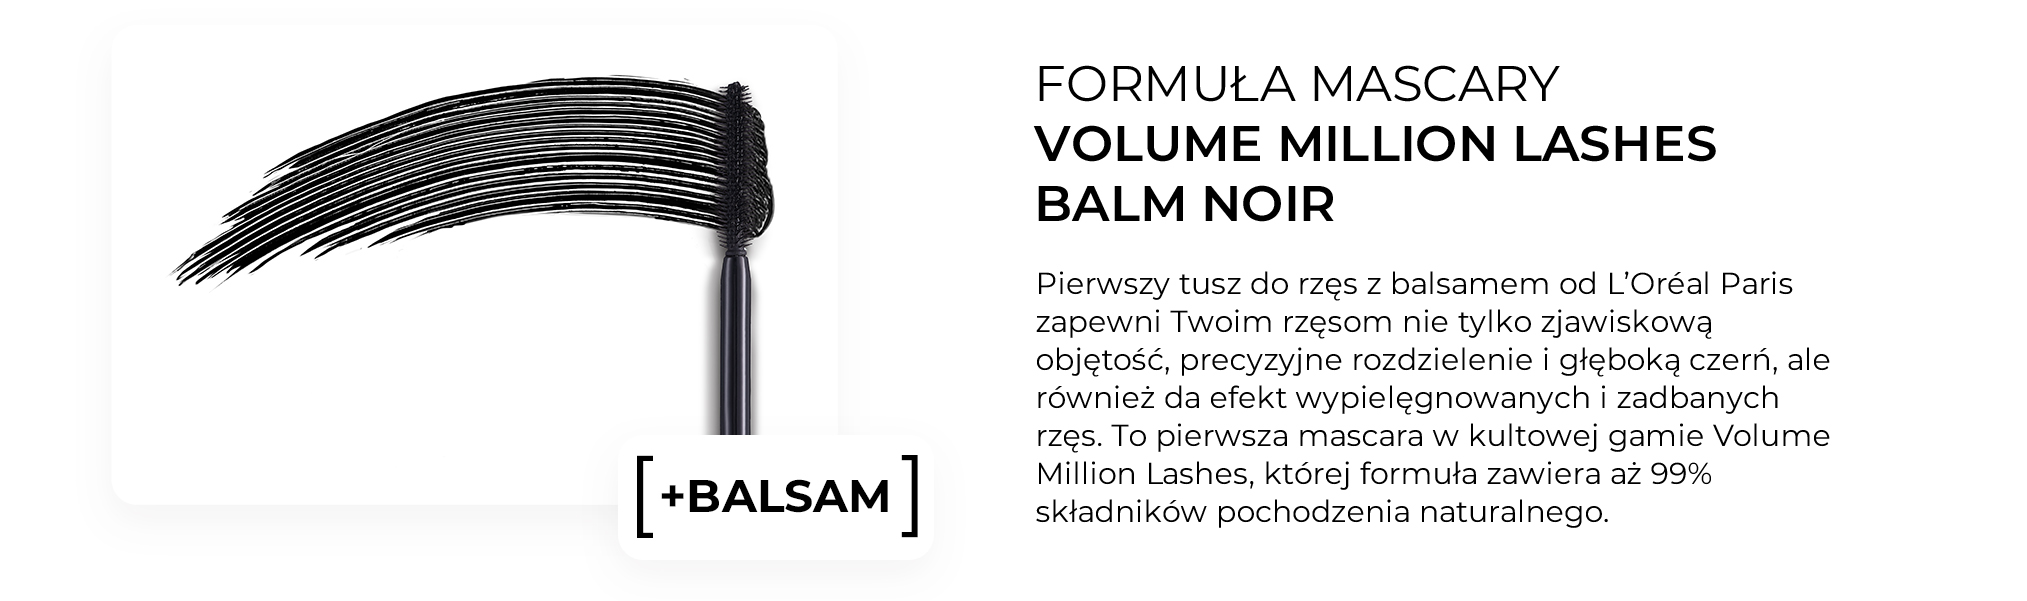 Volume Million Lashes Balm Noir